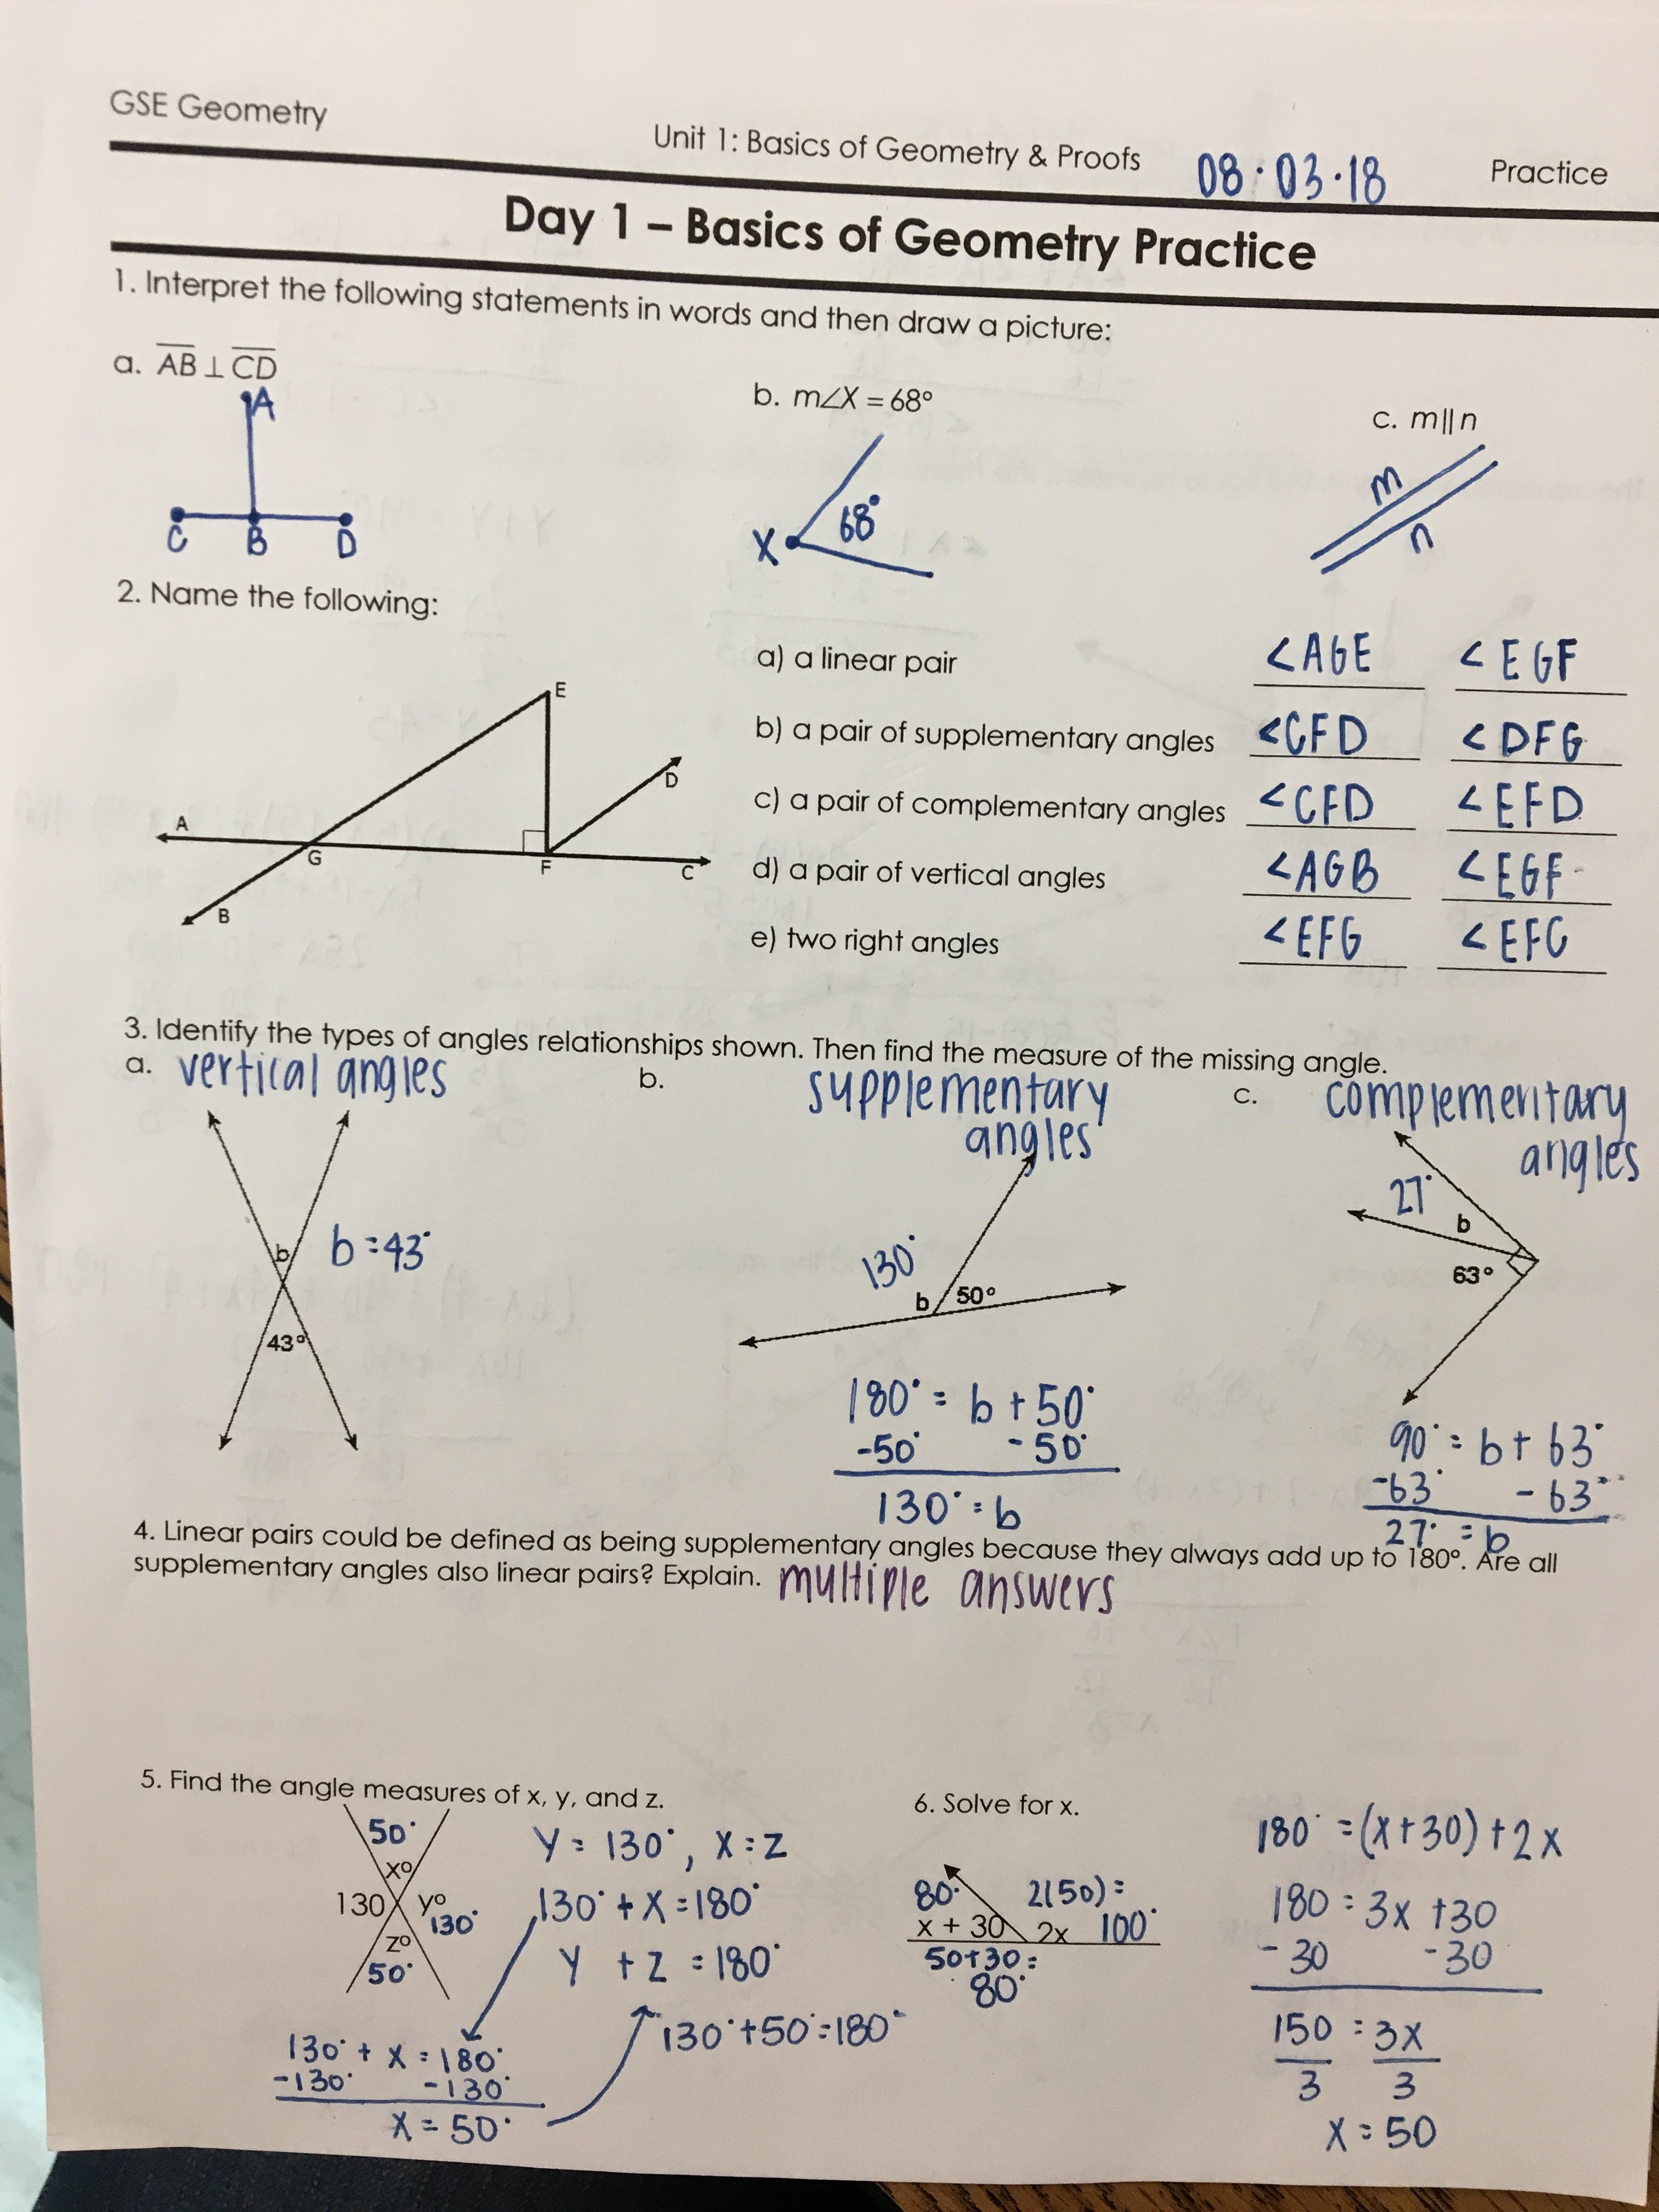 unit 1 geometry basics homework 6 answer key